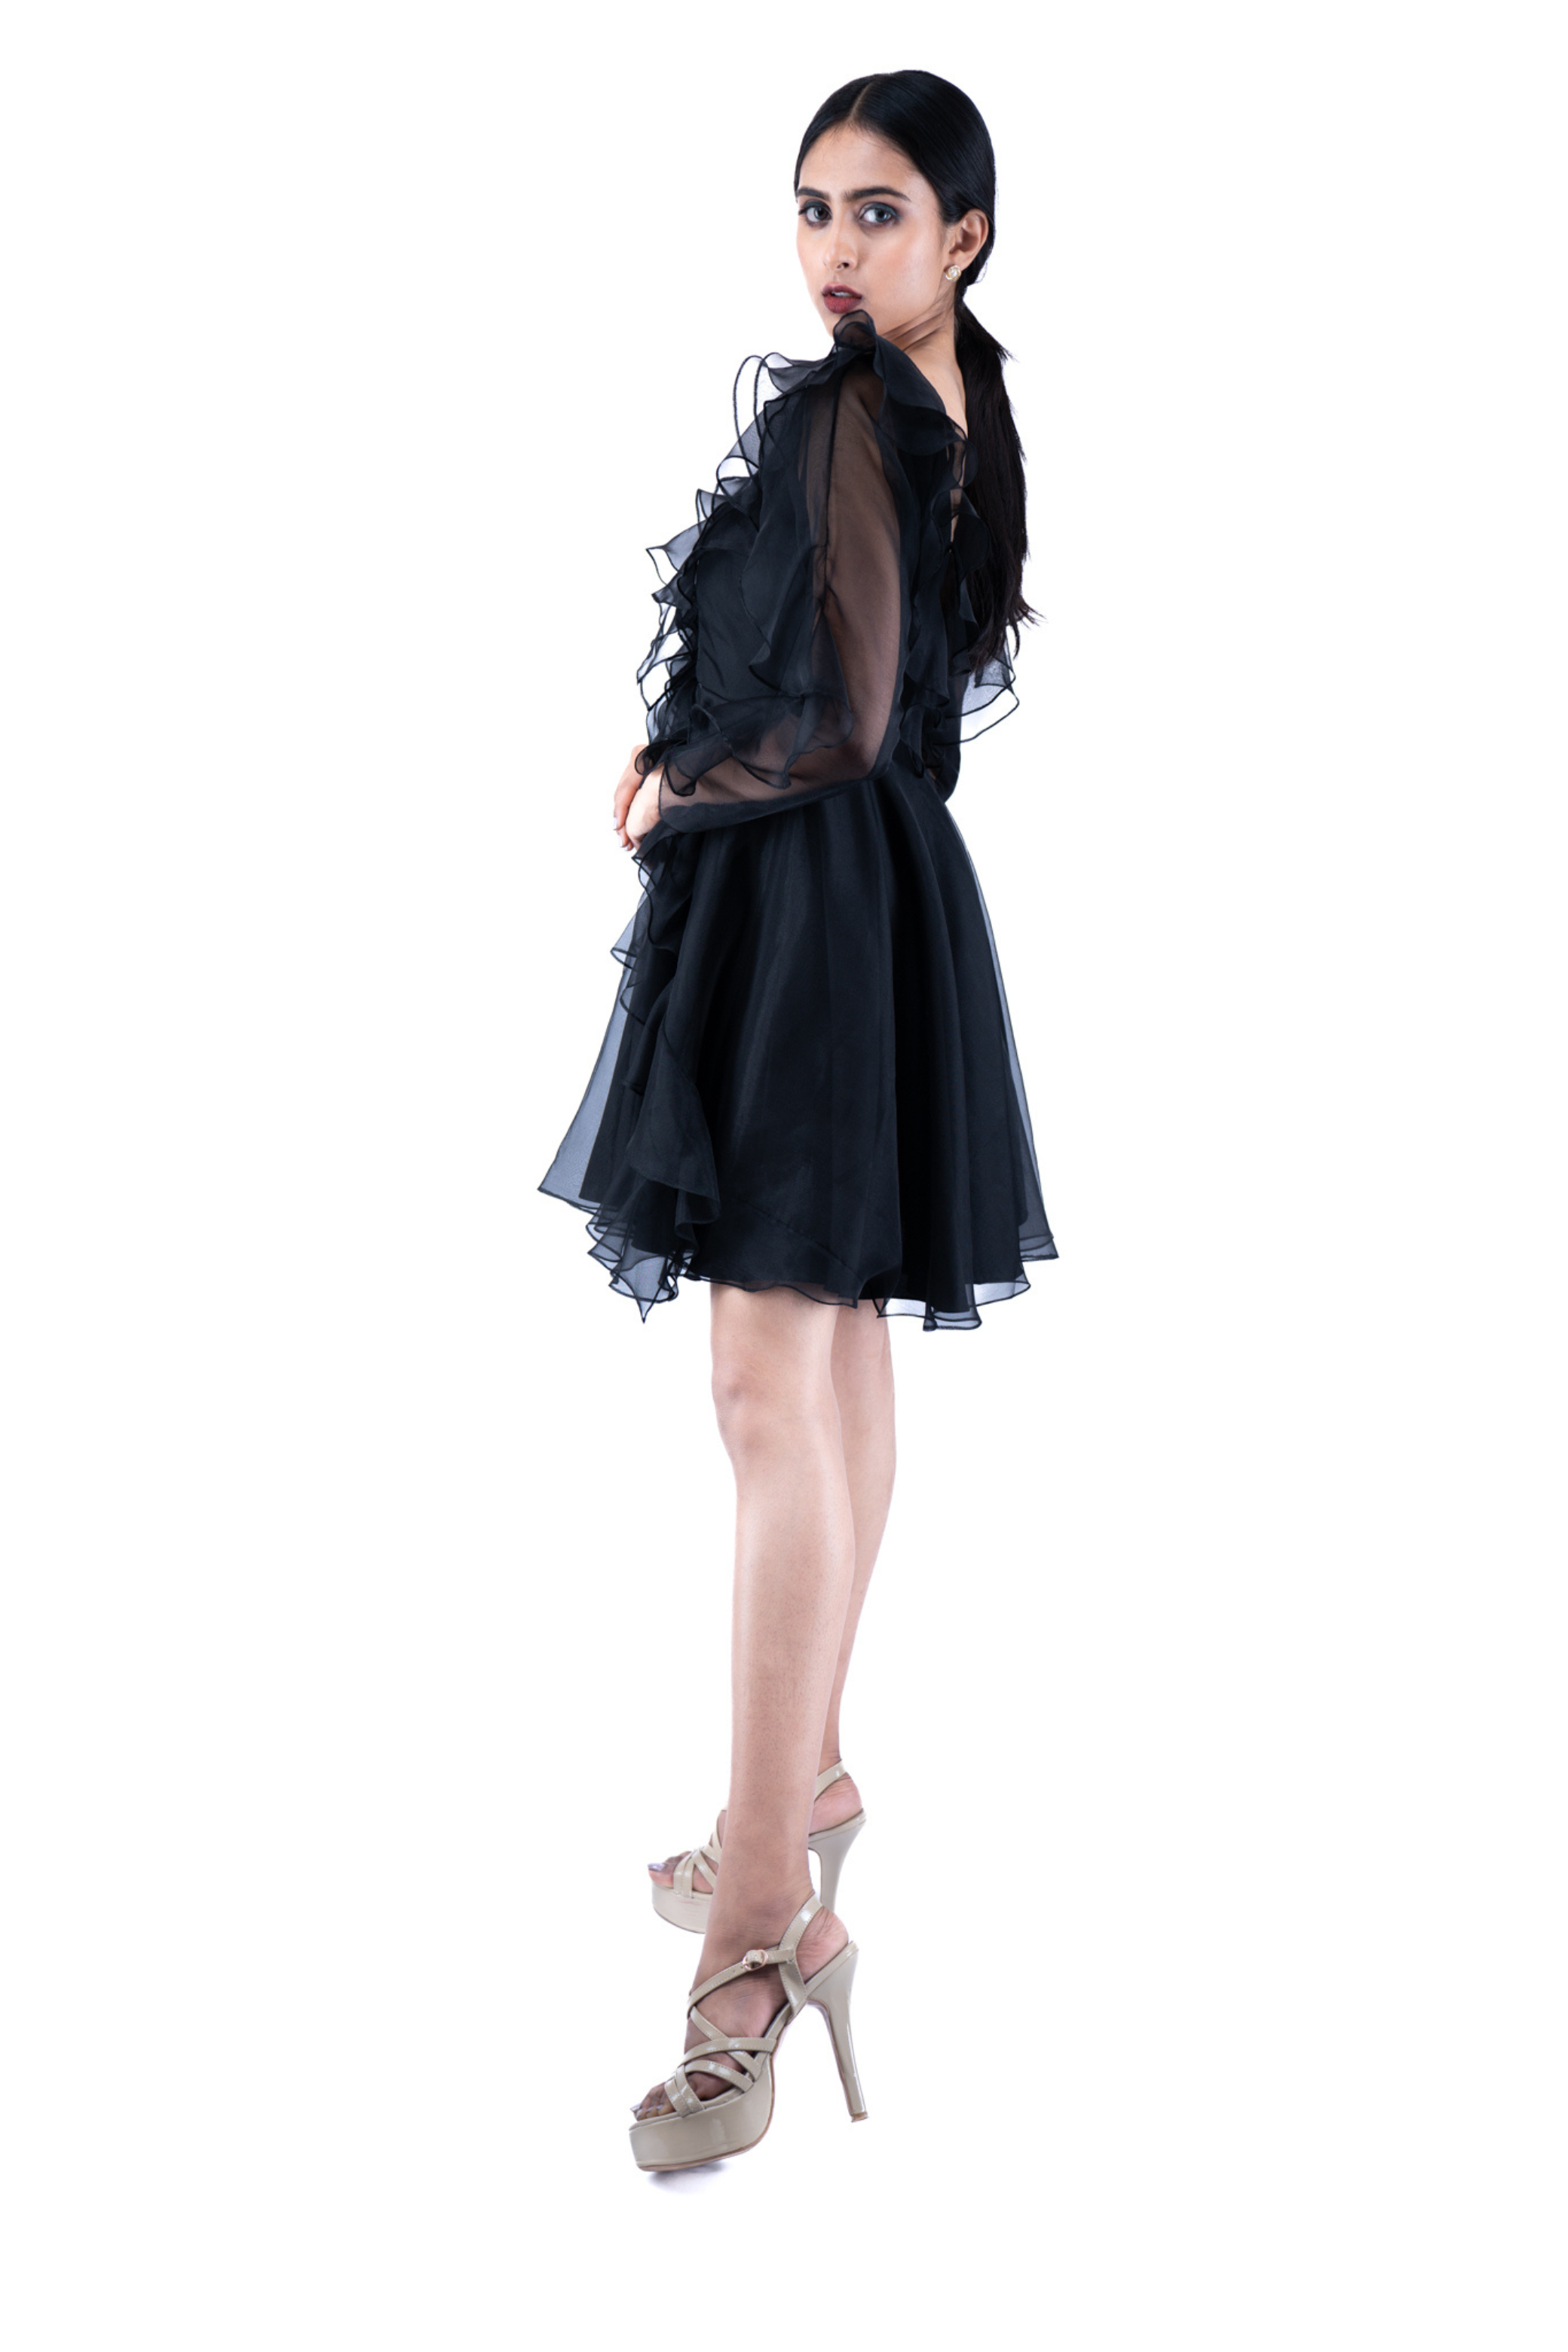 Raven Black Ruffle Dress